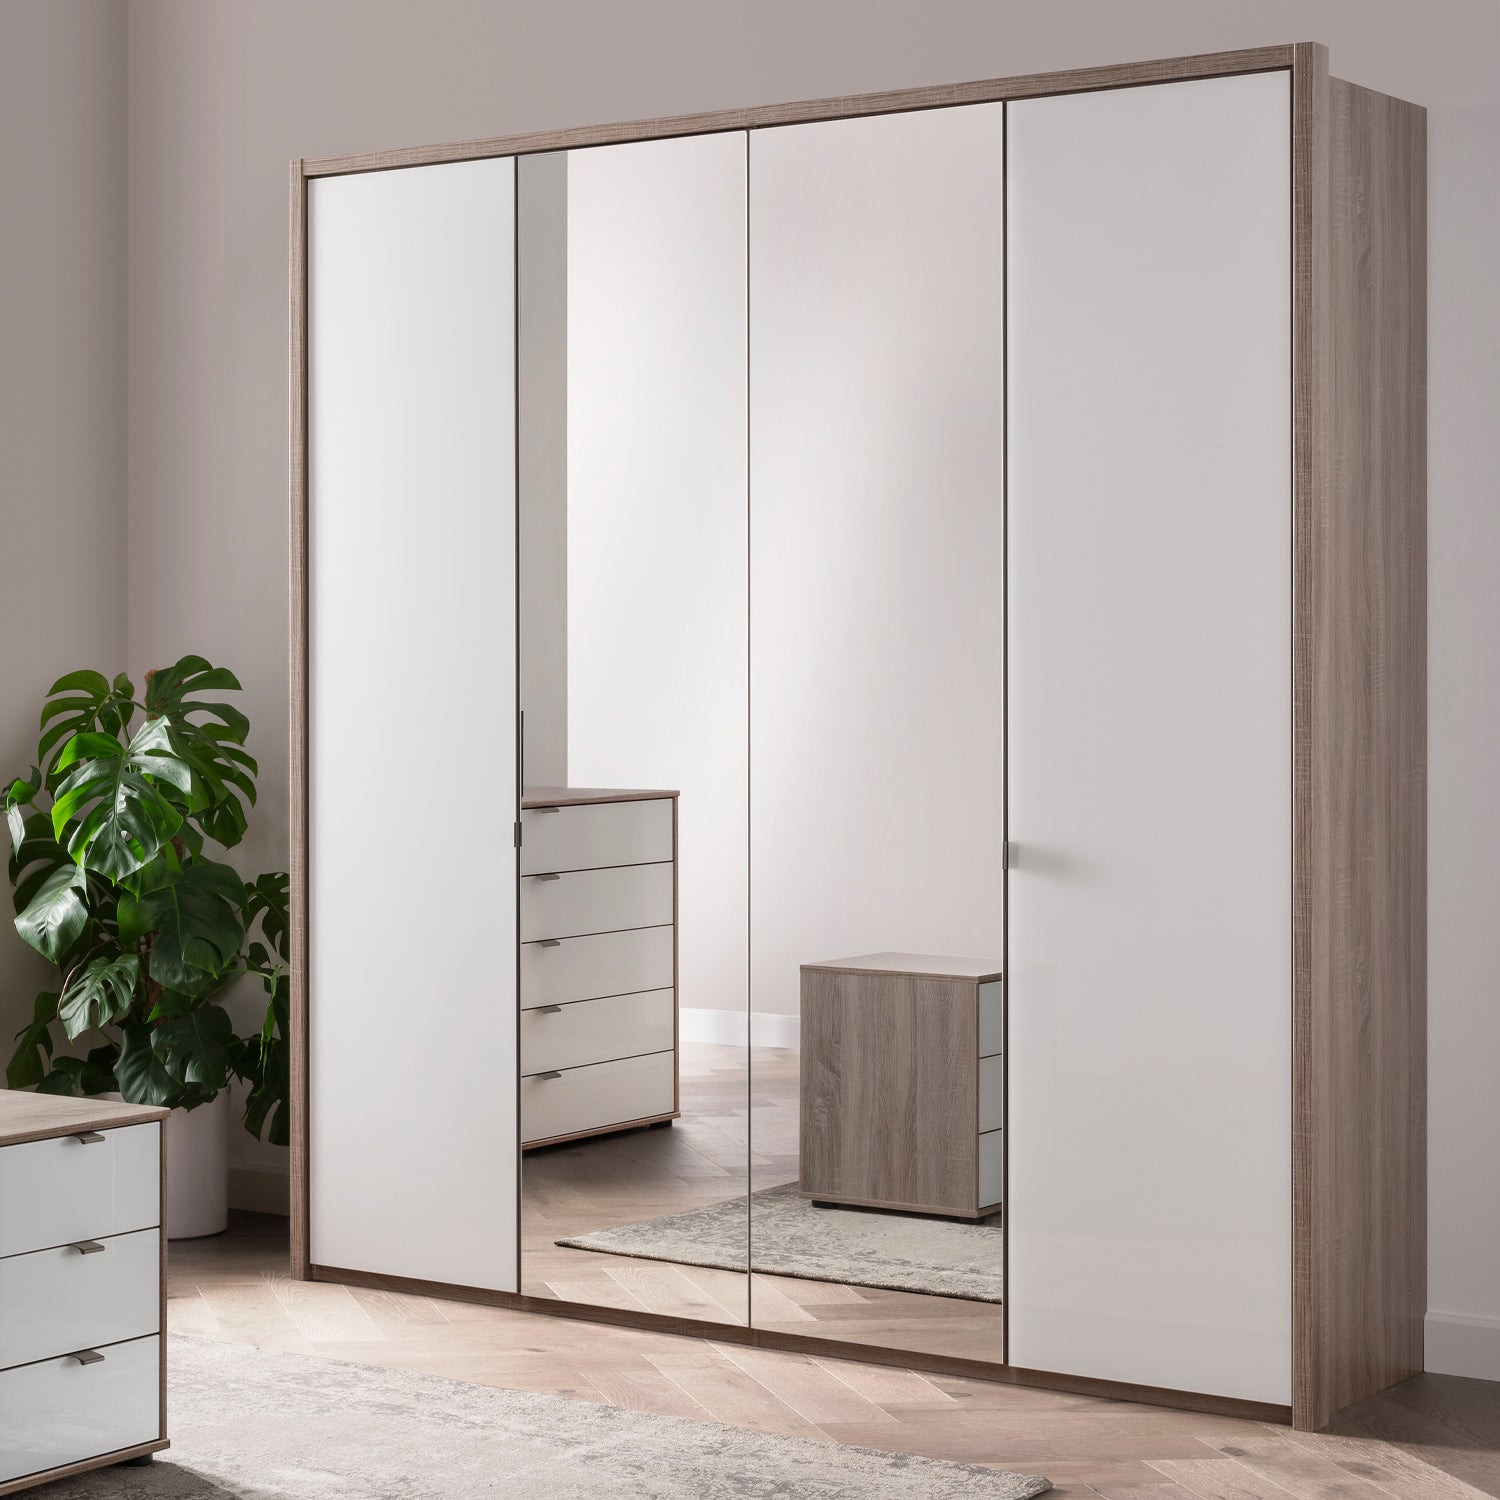 Barcelona 150cm Wardrobe With Glass Doors - White Glass